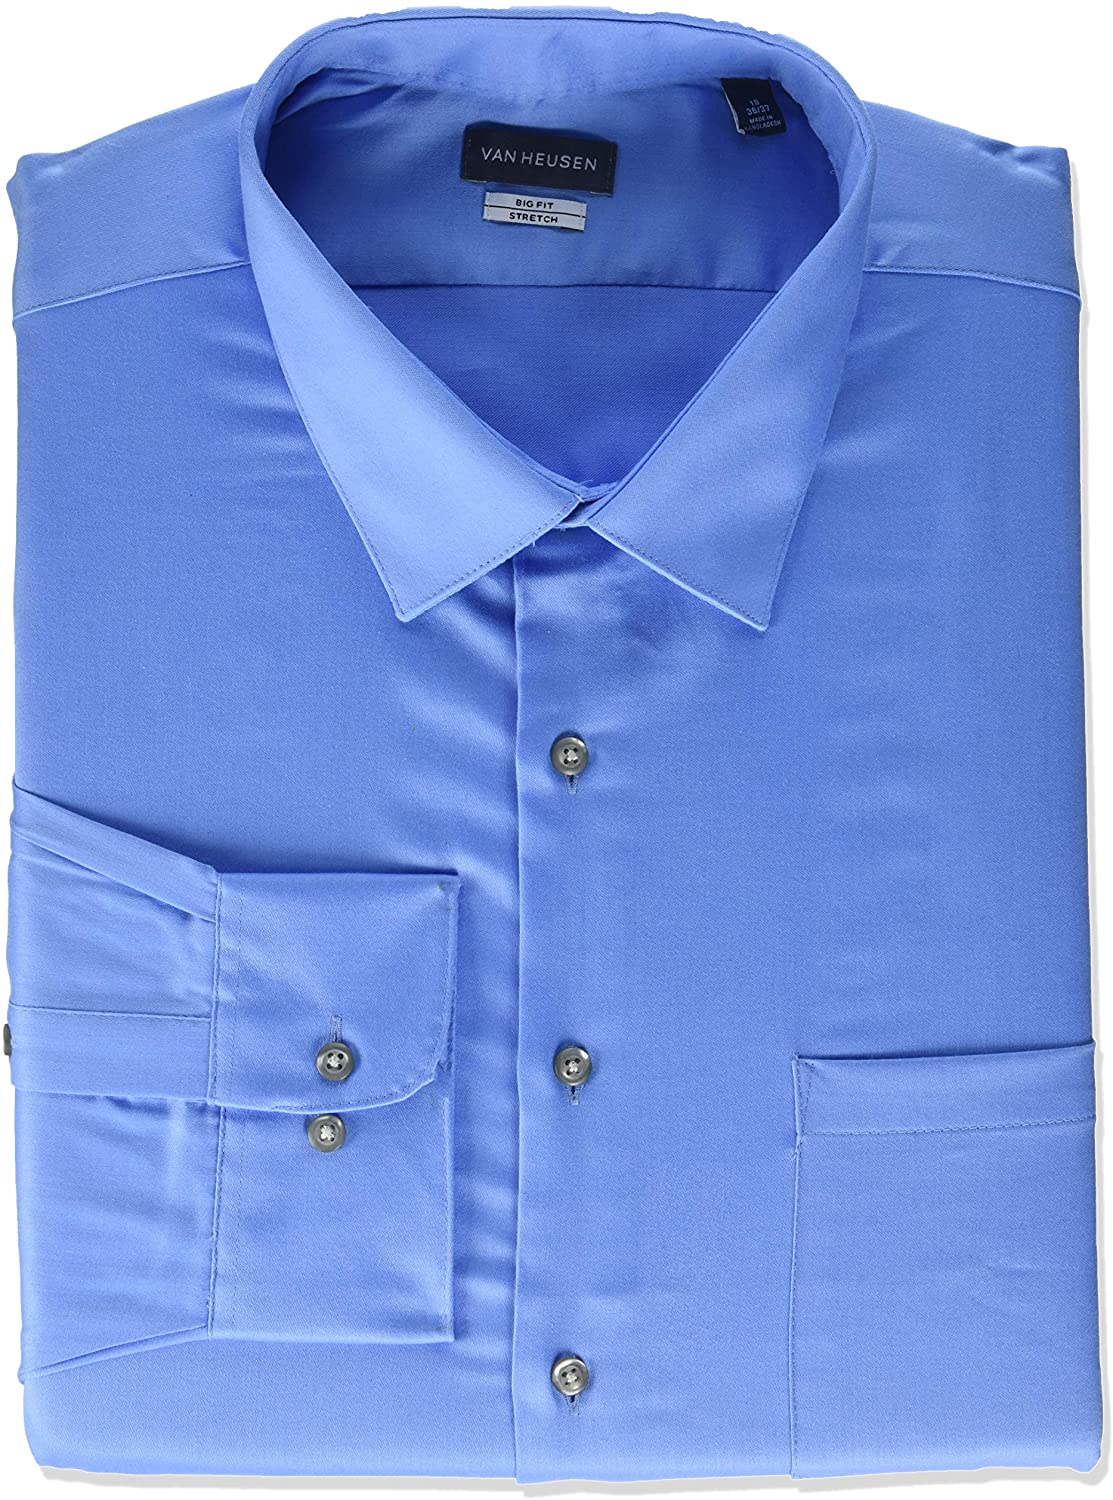 Van Heusen Mens Dress Shirt Lux Sateen Wrinkle Free Solid size 15 NEW 